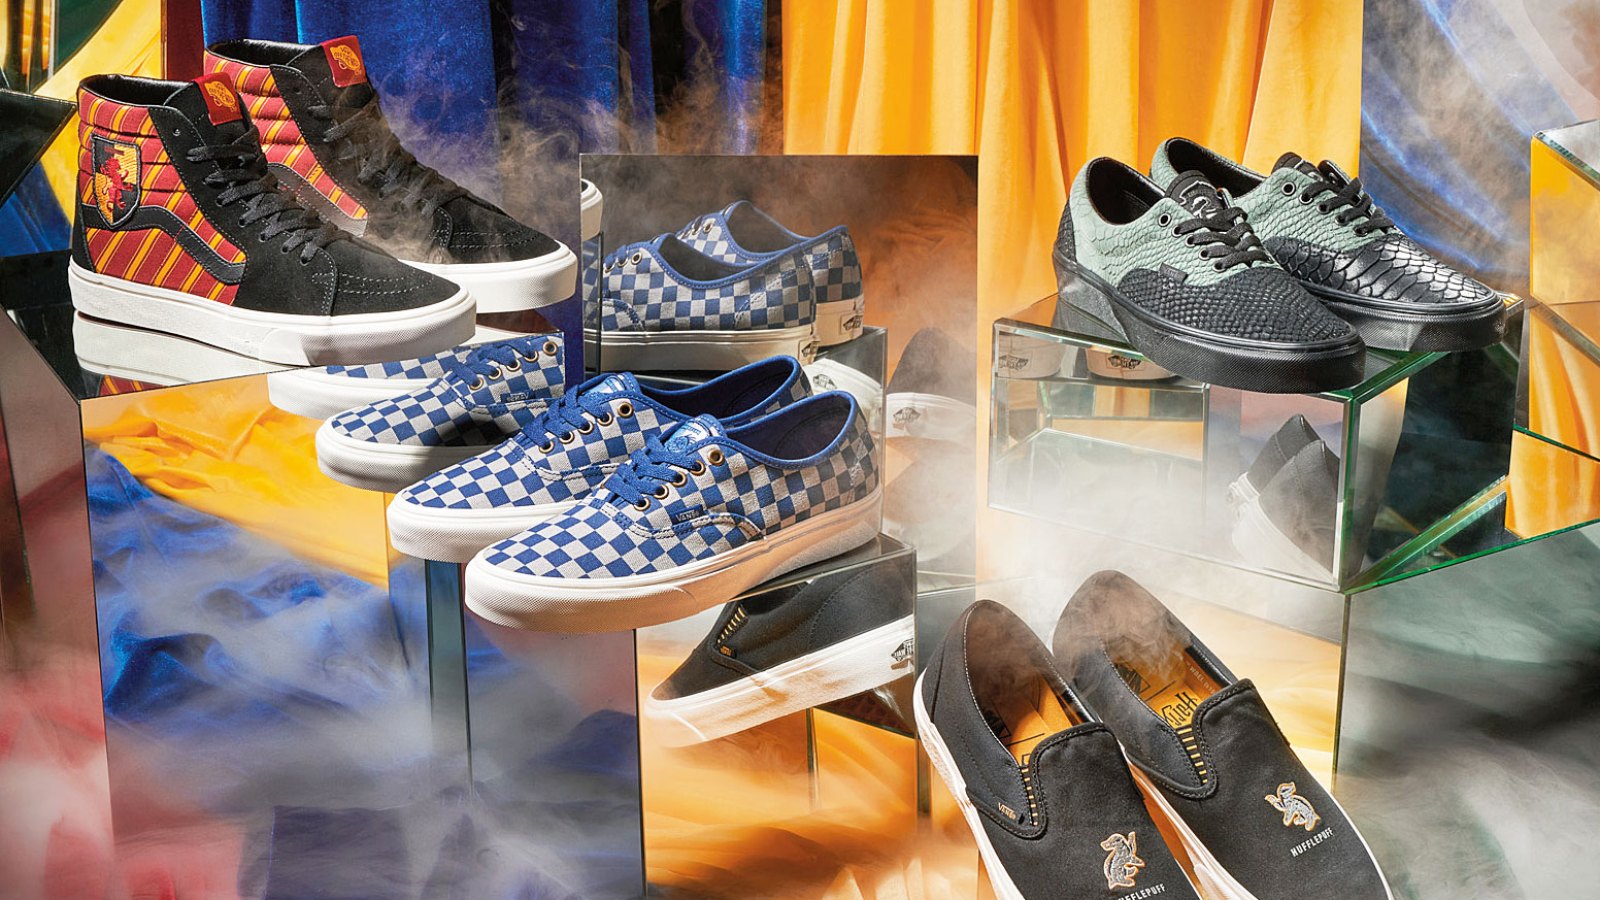 Harry Potter Vans Shoes Available Now - Store List